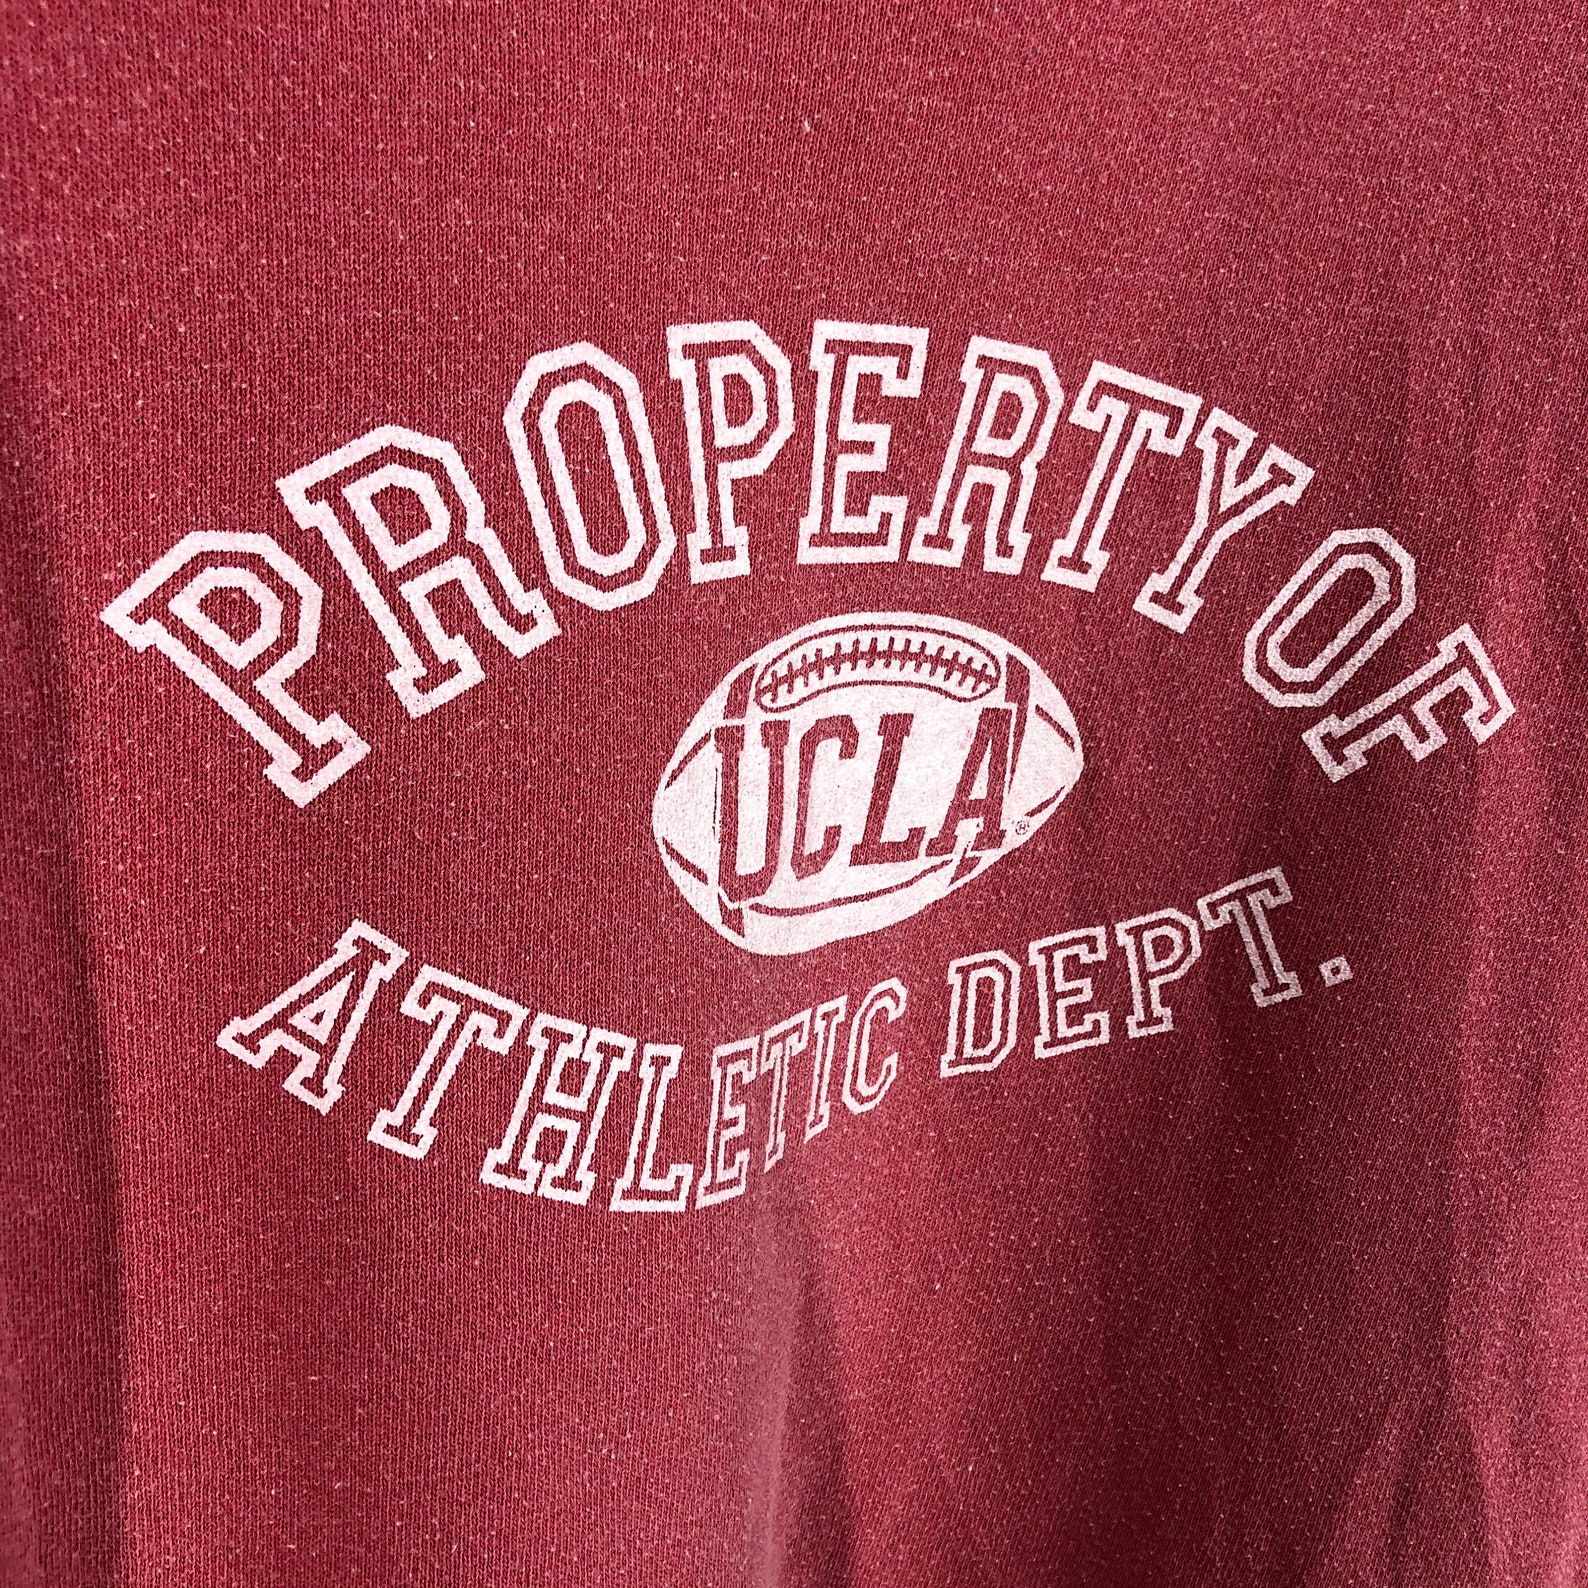 90s Vintage UCLA Property Of Athletic Dept. by LICENSED | Etsy